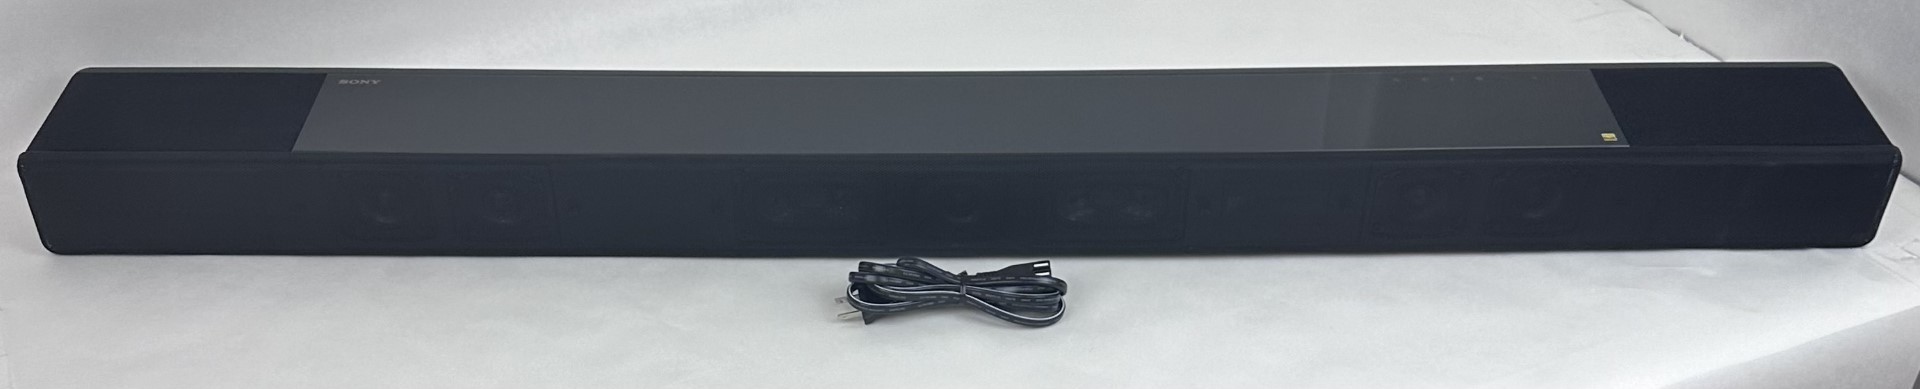 Sony HT-A7000 7.1.2 Channel Soundbar with Dolby Atmos - 2921 U